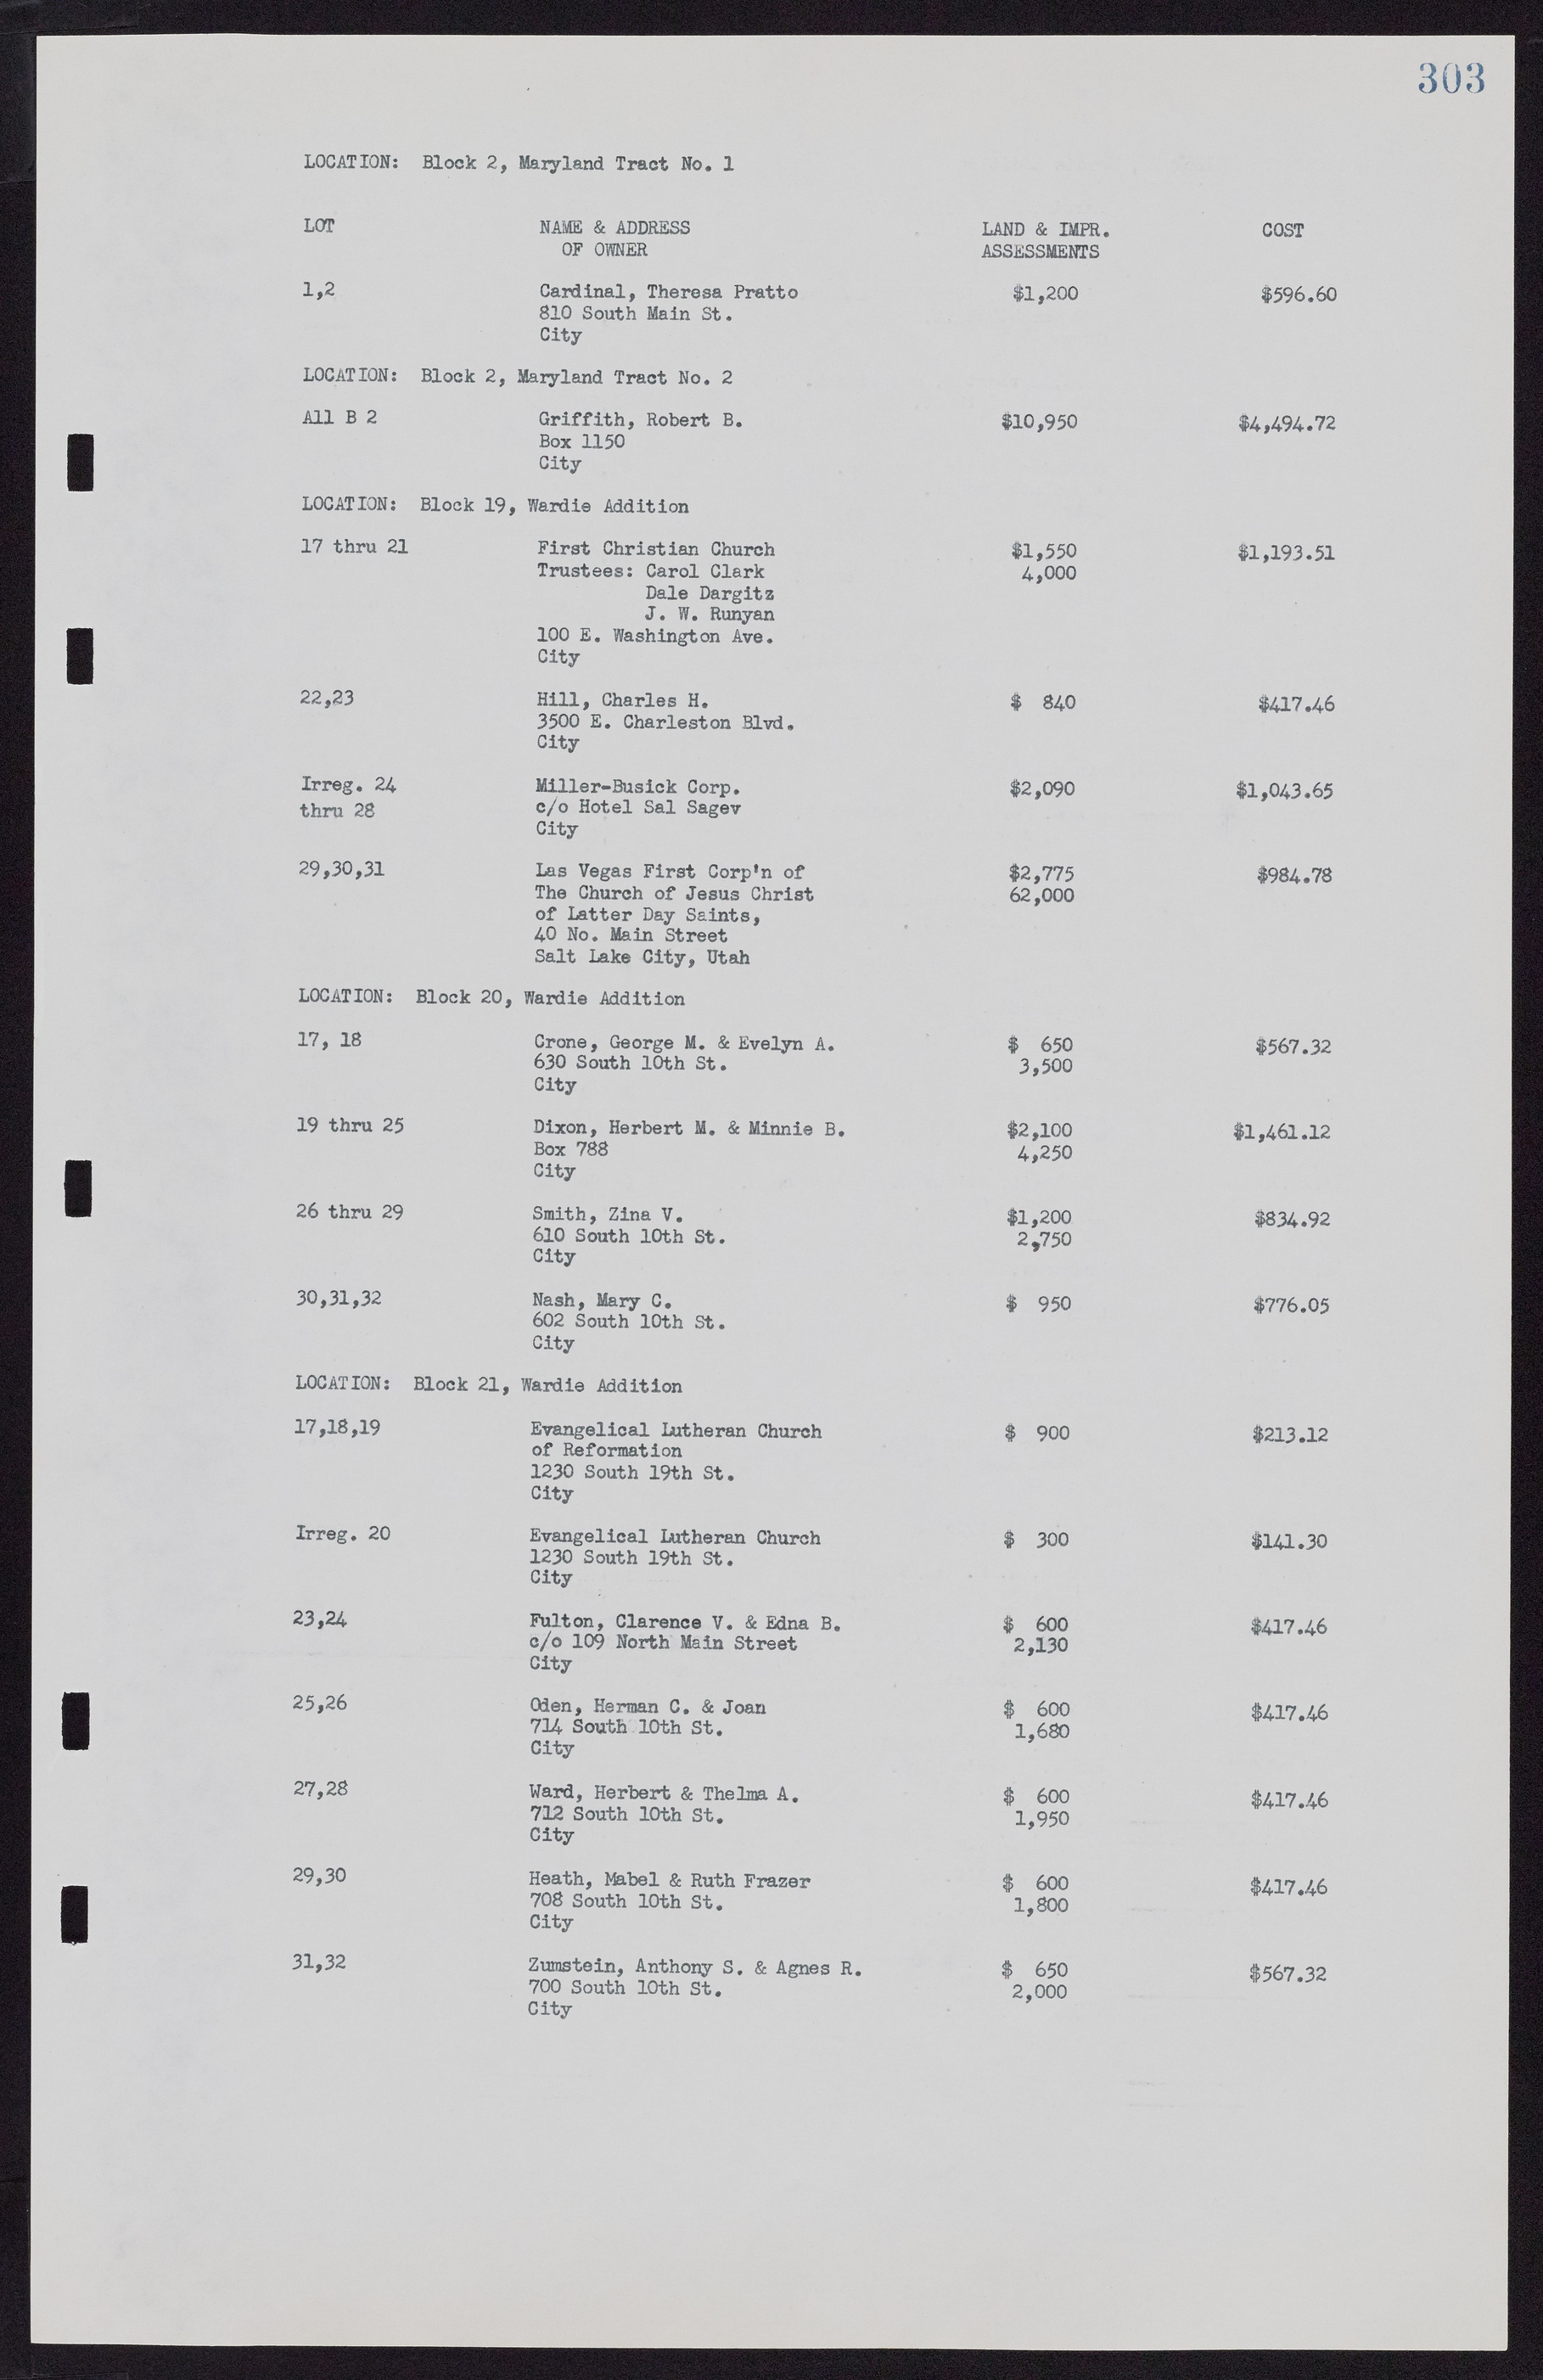 Las Vegas City Commission Minutes, November 7, 1949 to May 21, 1952, lvc000007-315